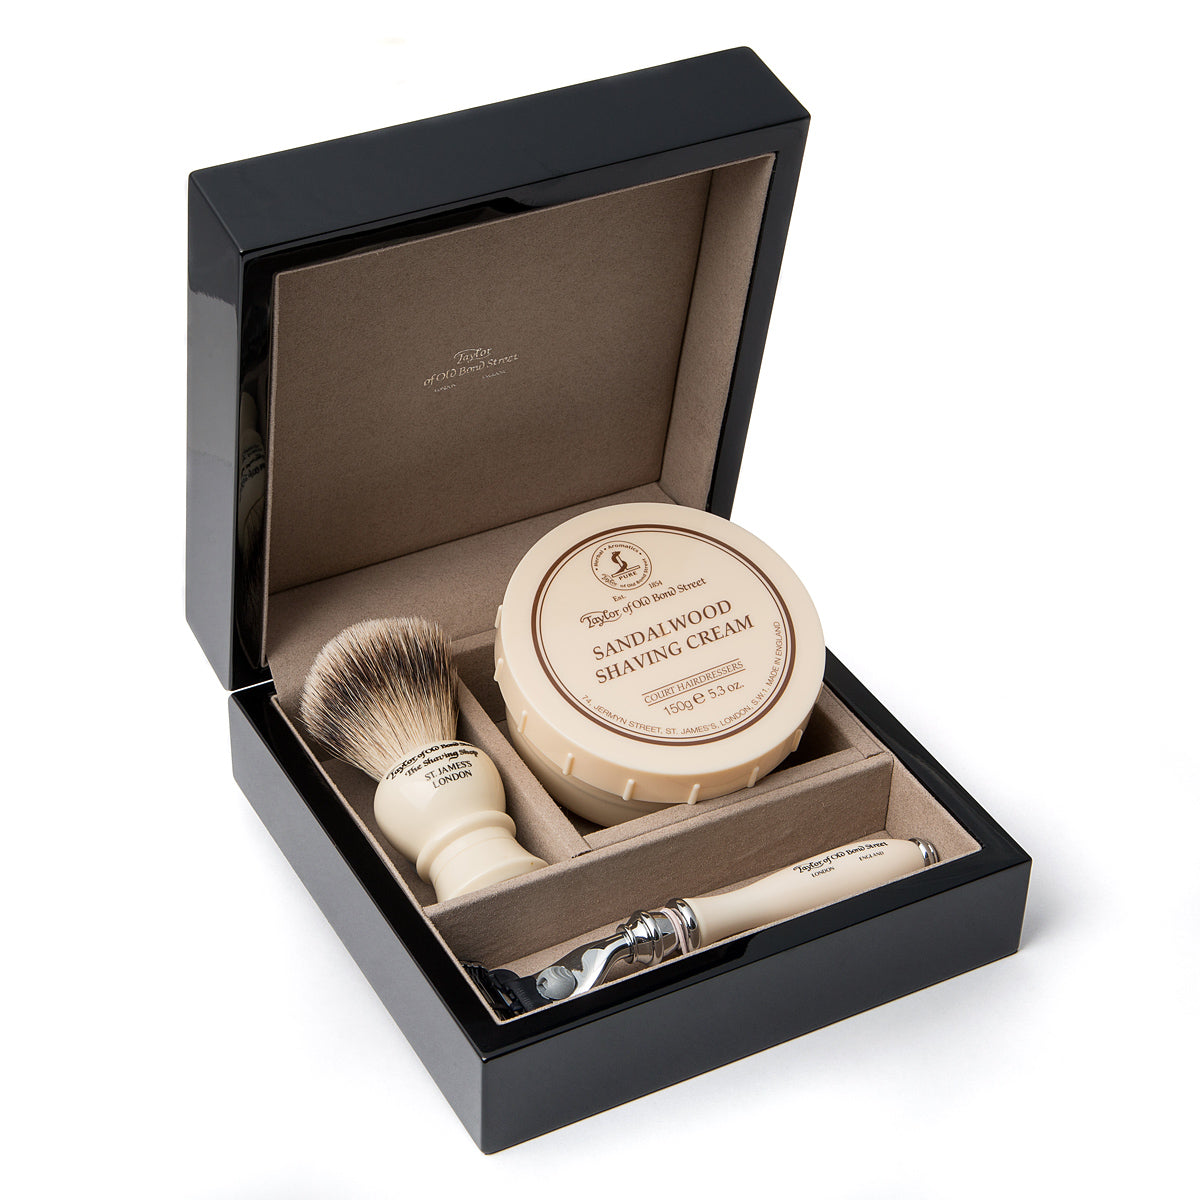 Razor, Brush and Sandalwood Shaving Cream in Wooden Gift Box